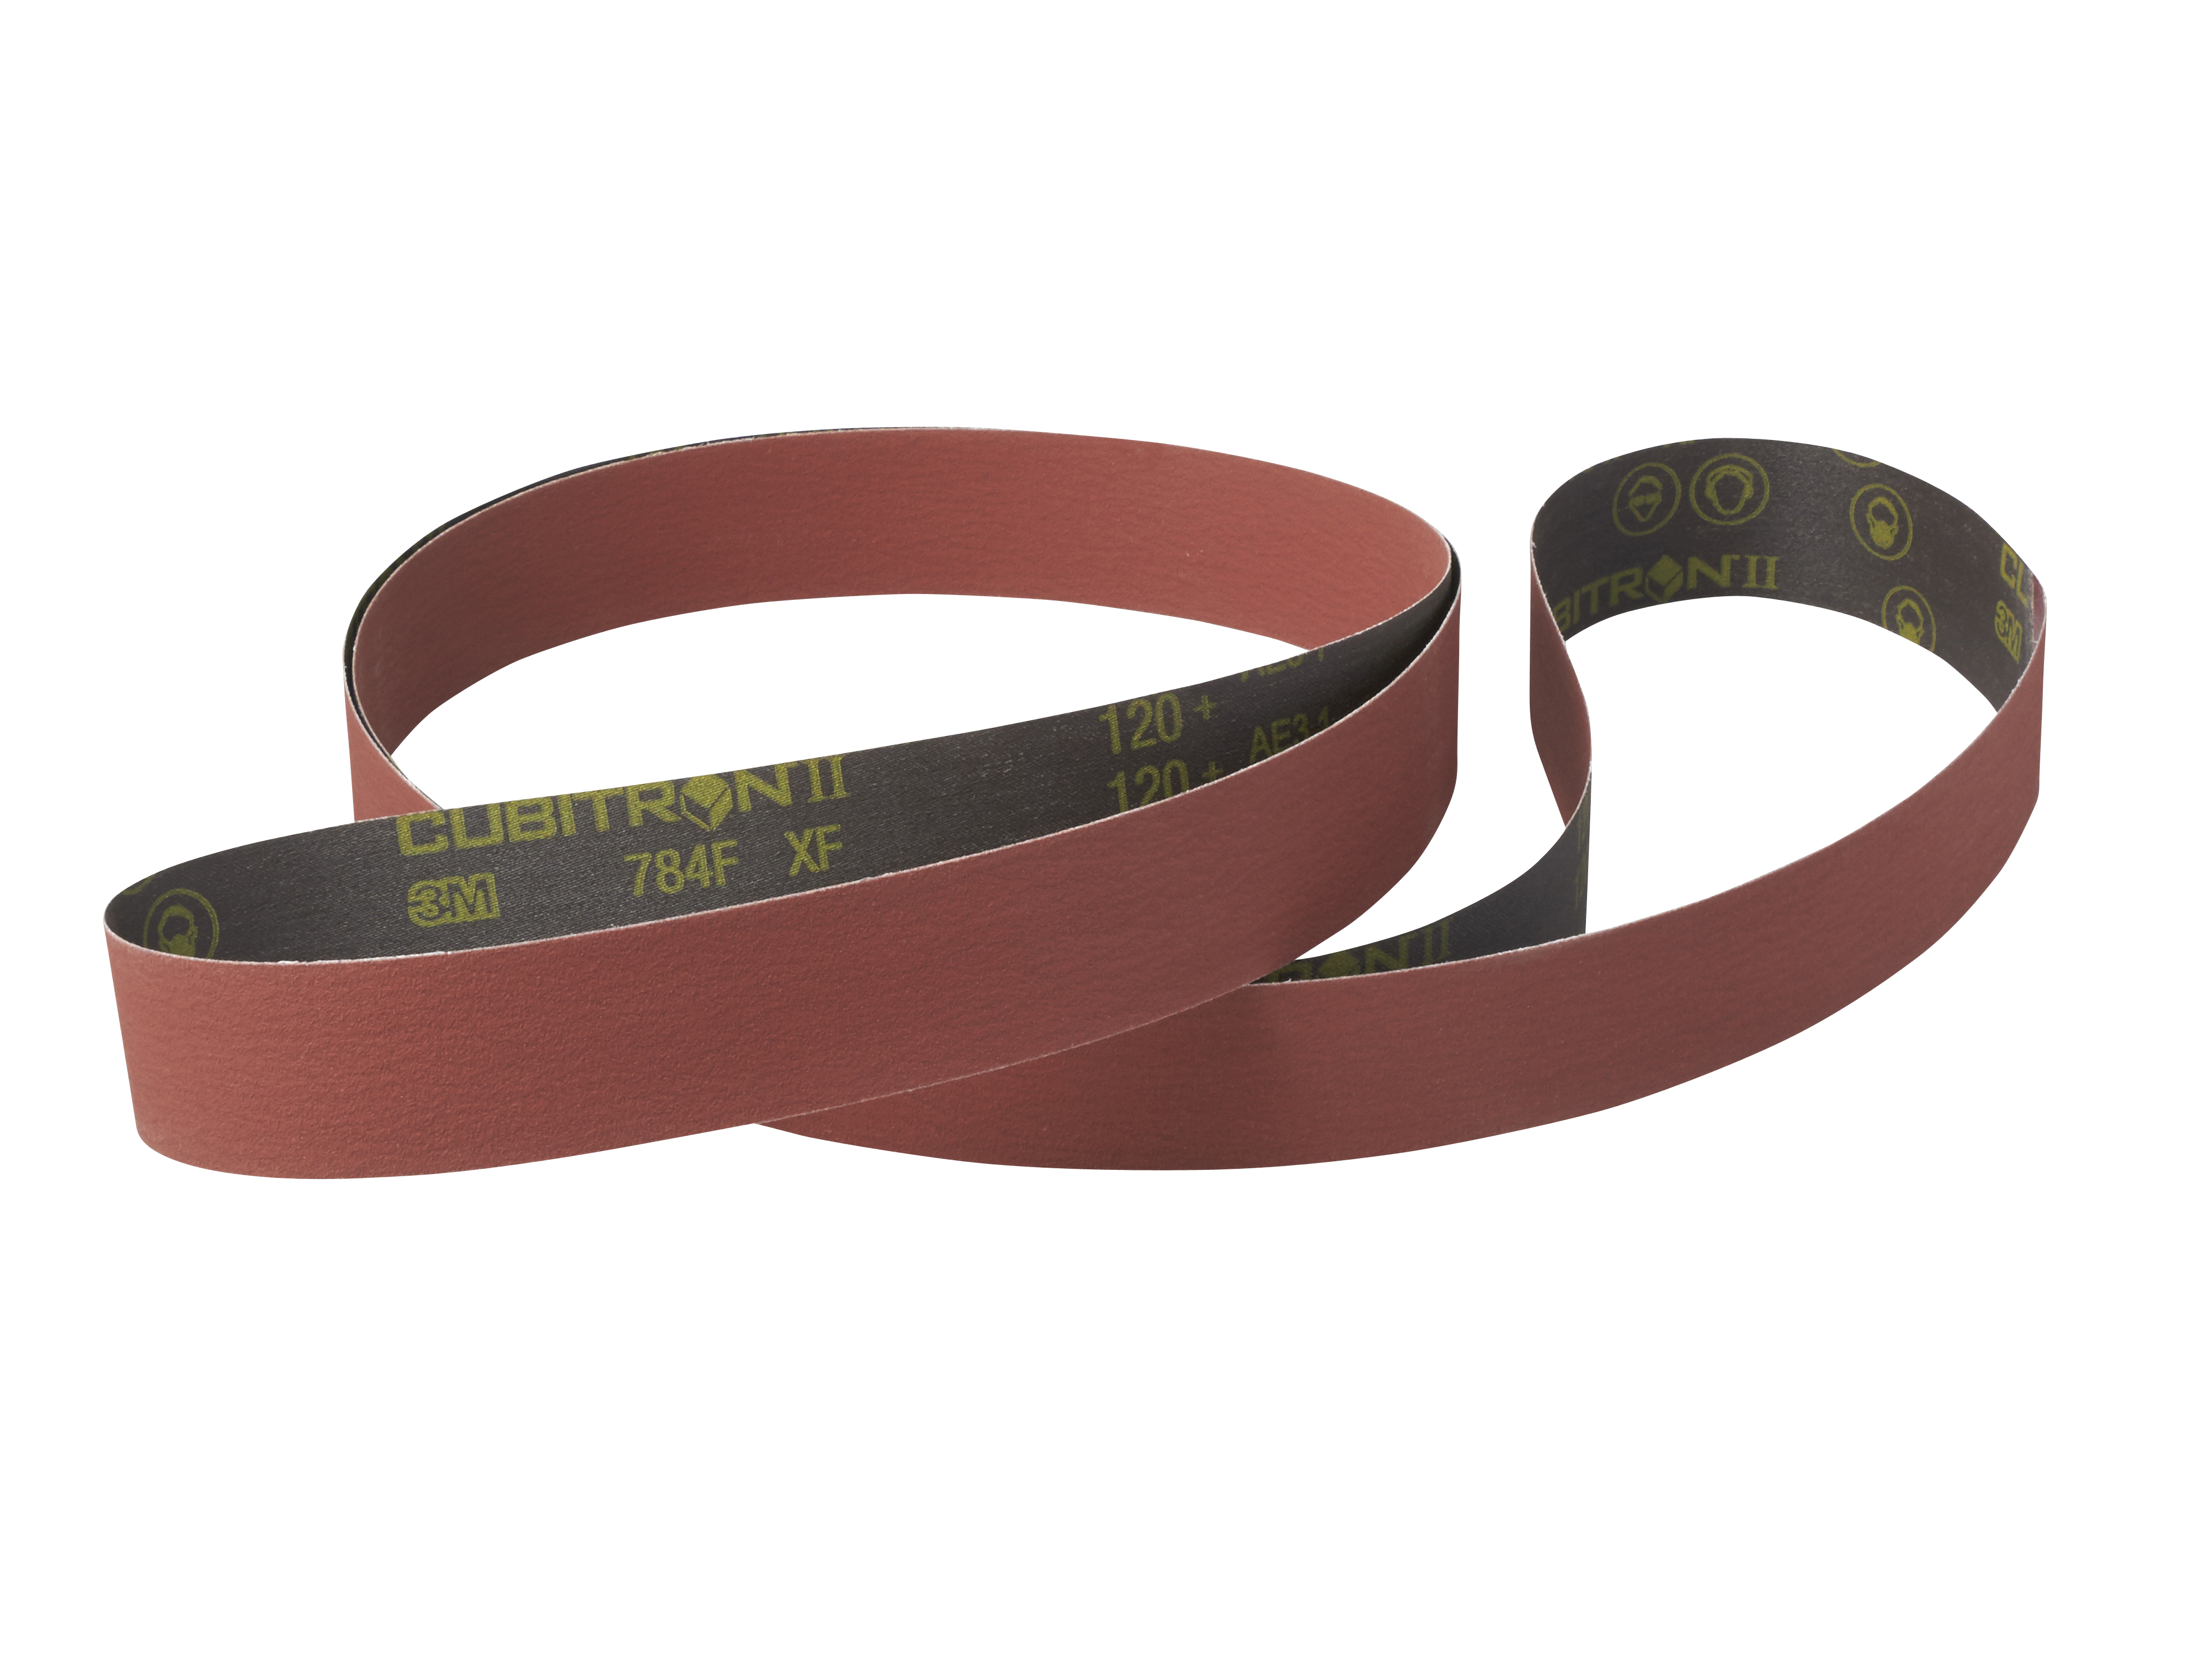 Sufacer condition belt 3m 048011-15894 